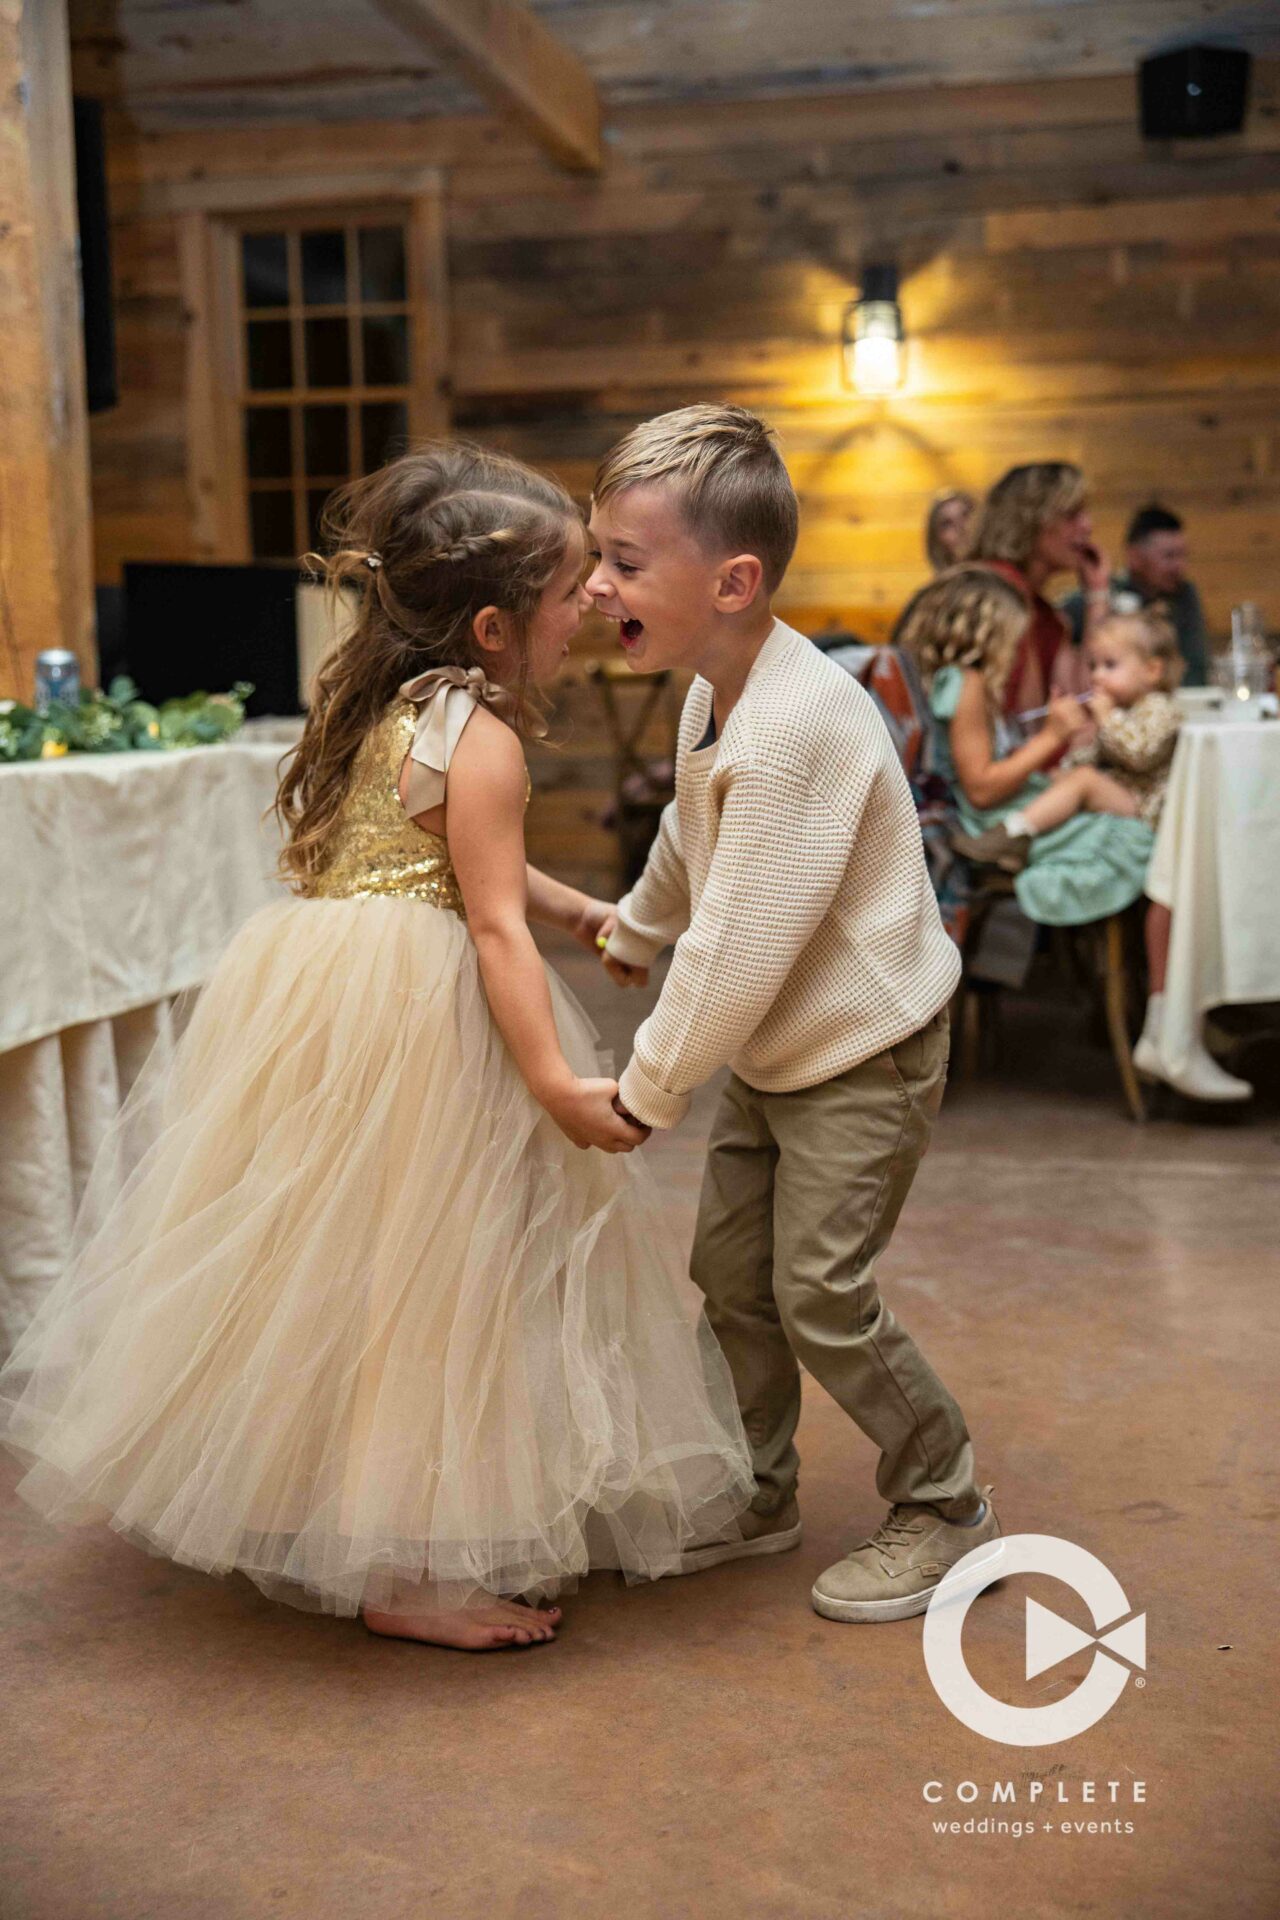 Kid-Friendly vs. Adults-Only Weddings